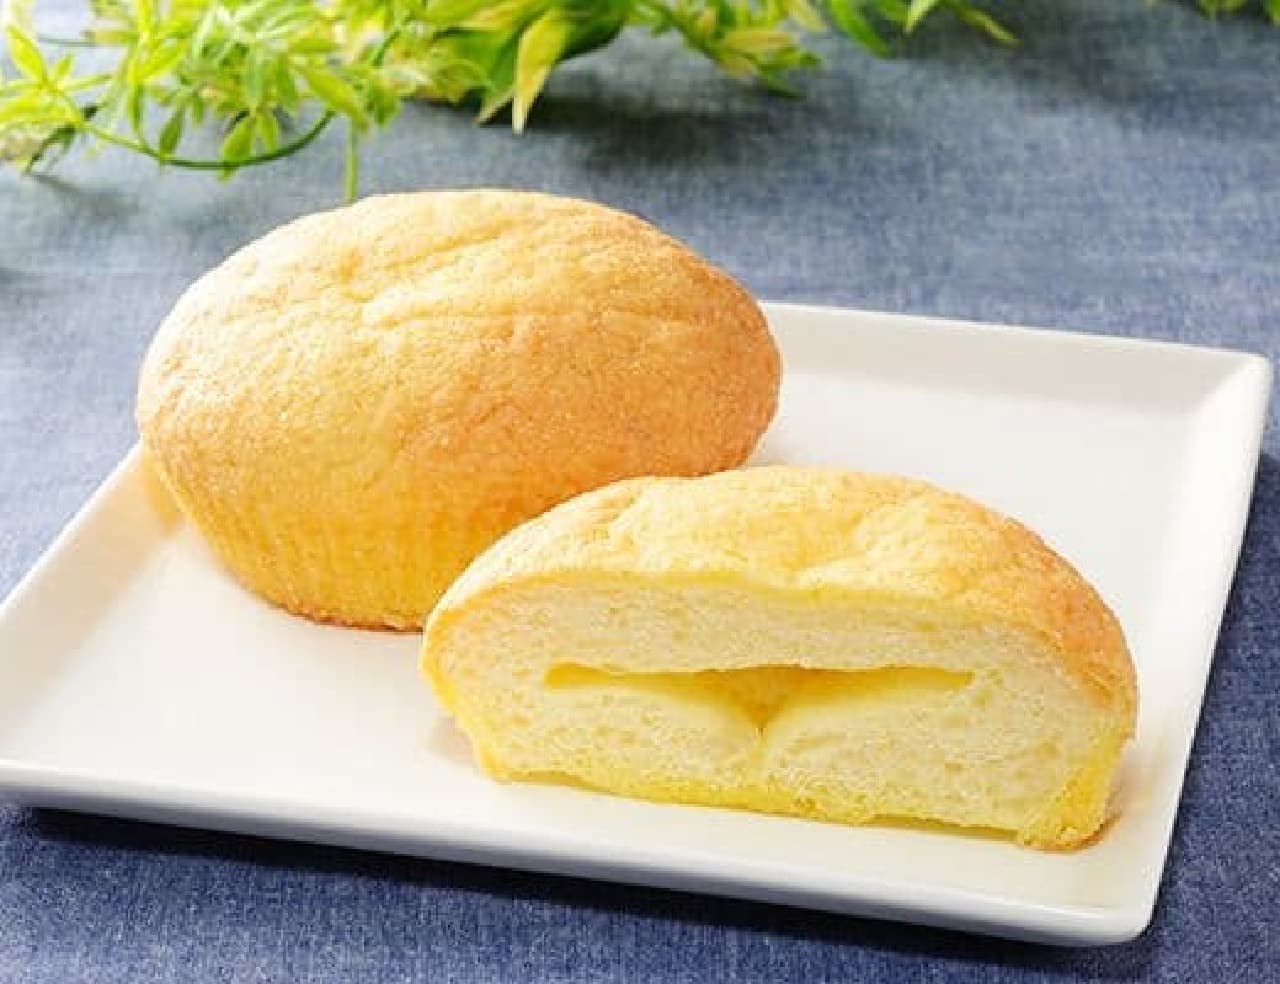 Lawson "Juwa Bata Melon Pan" (melon bread)